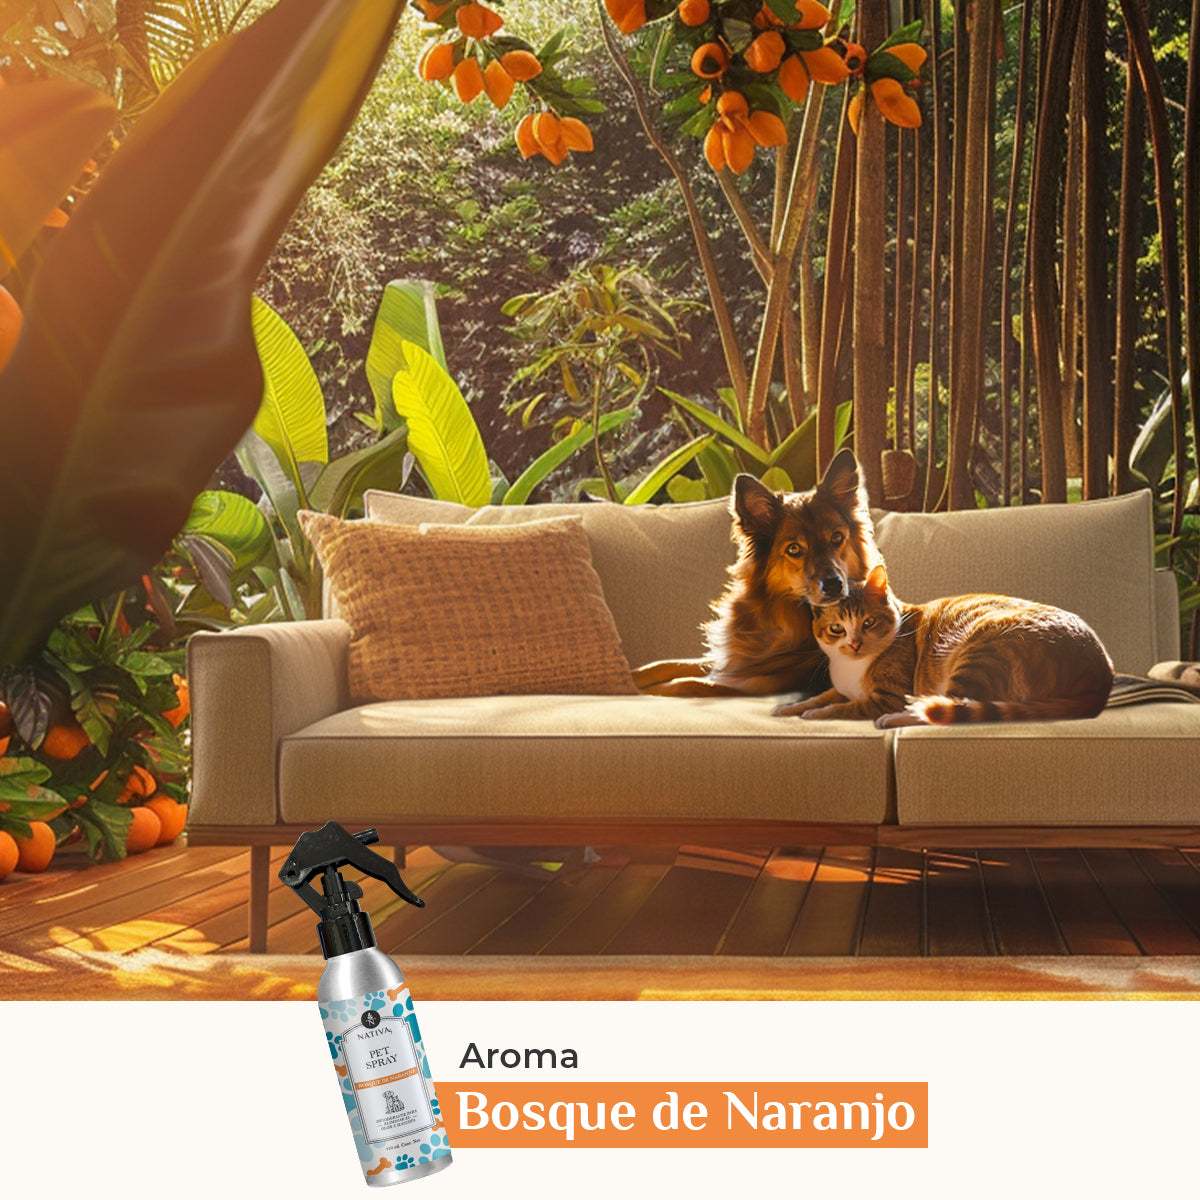 Pet Spray - Aroma Bosque de Naranjo 120mL Neutraliza malos olores de tu mascota!